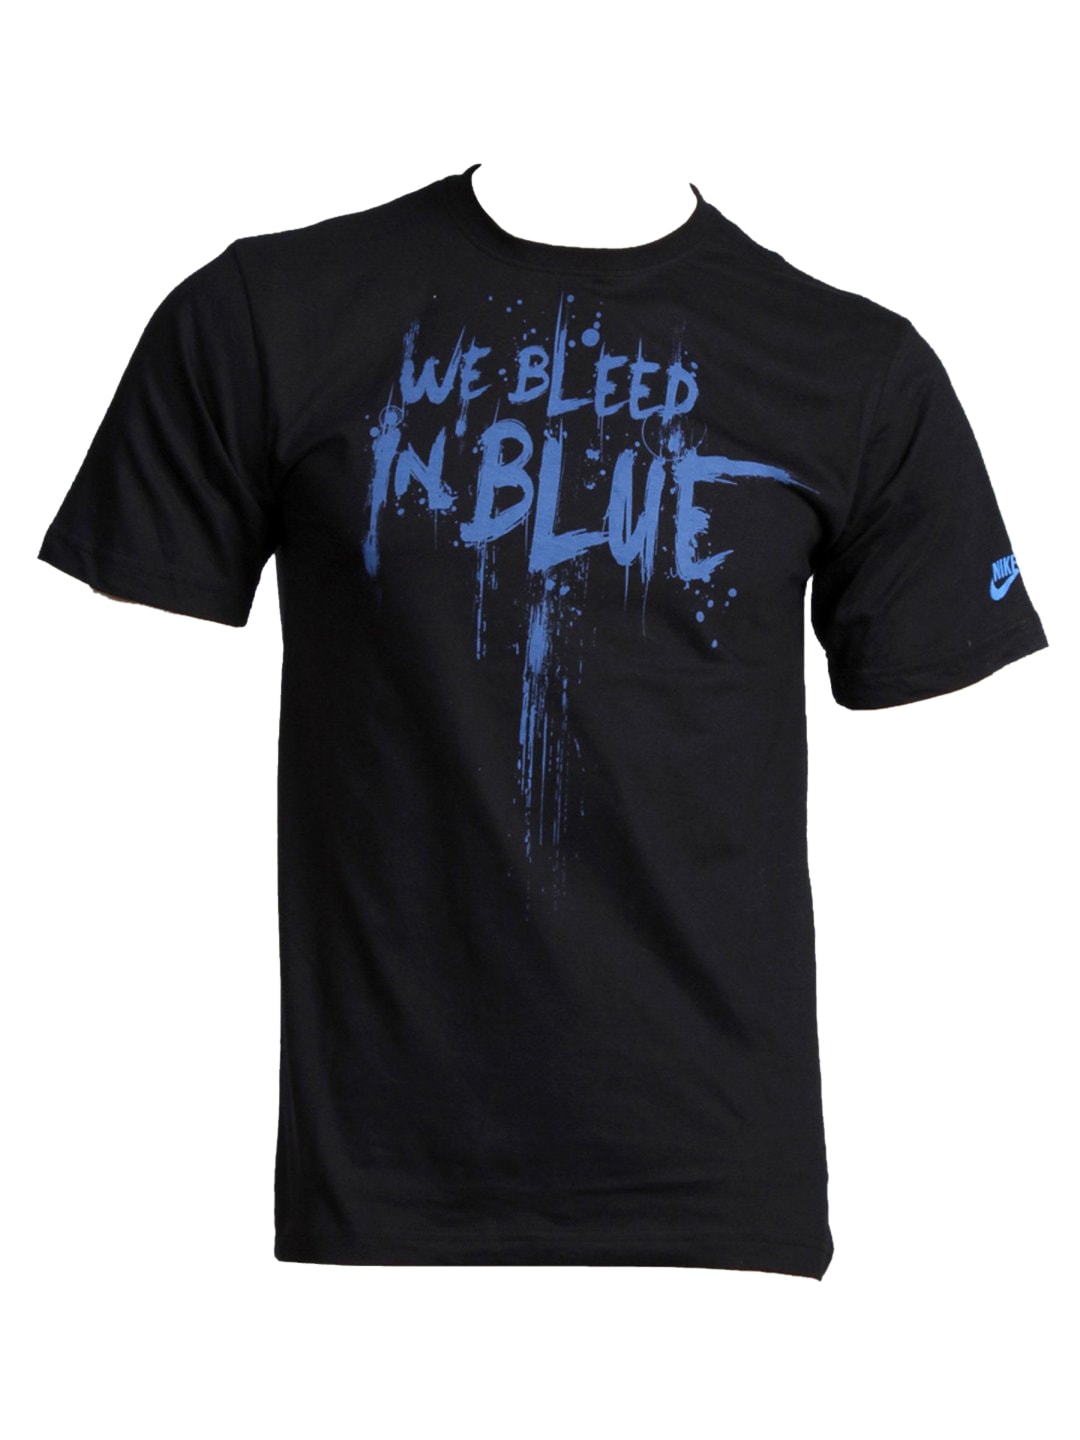 Nike Black Bleed Blue T-shirt